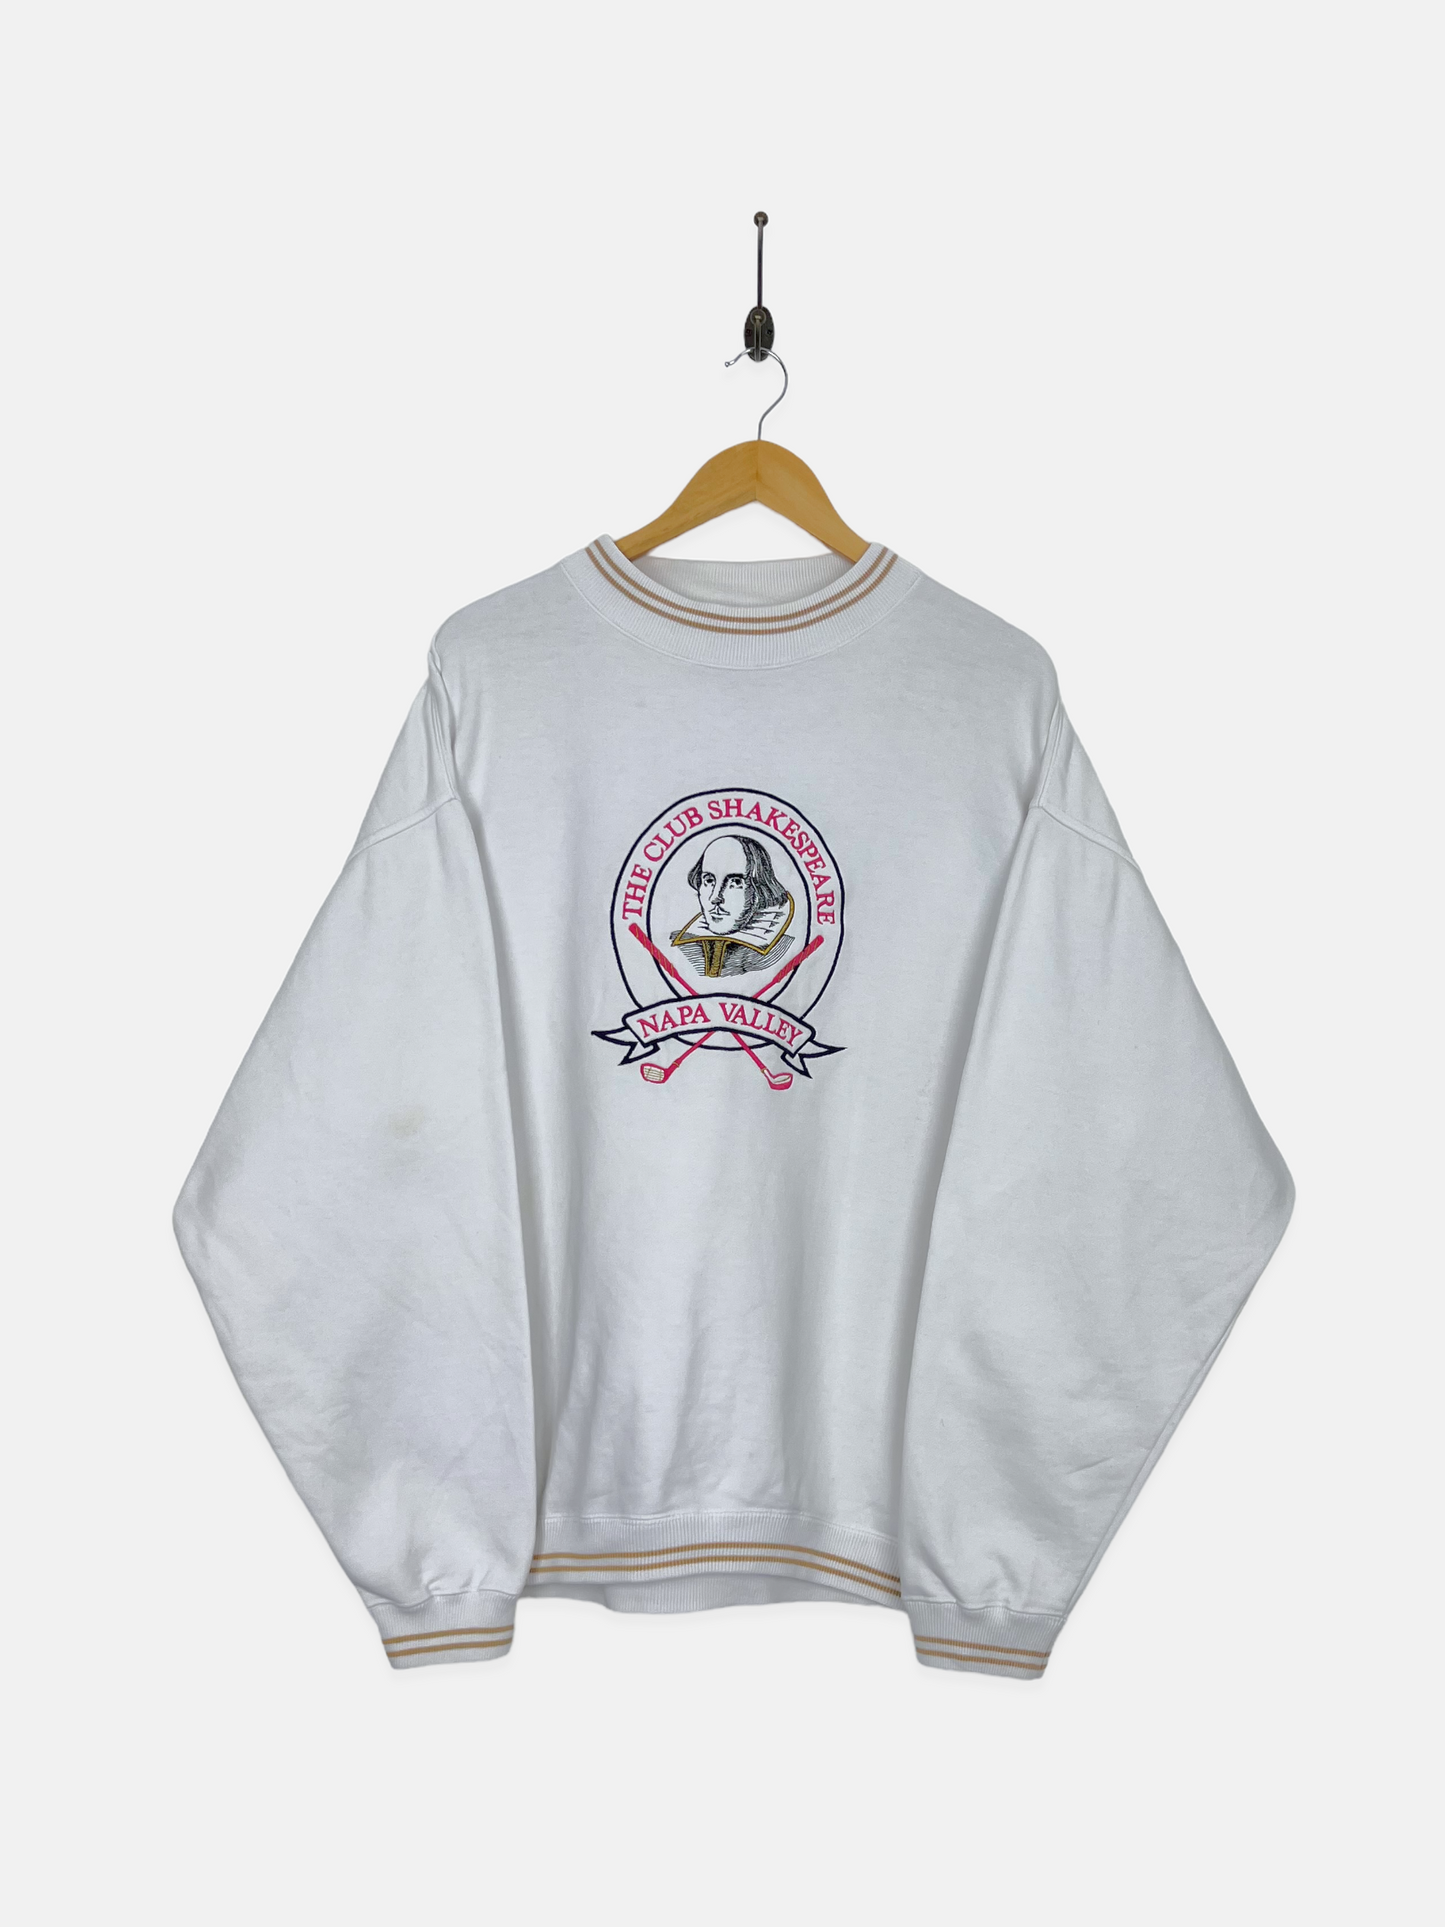 90's Napa Valley Embroidered Vintage Sweatshirt Size L-XL